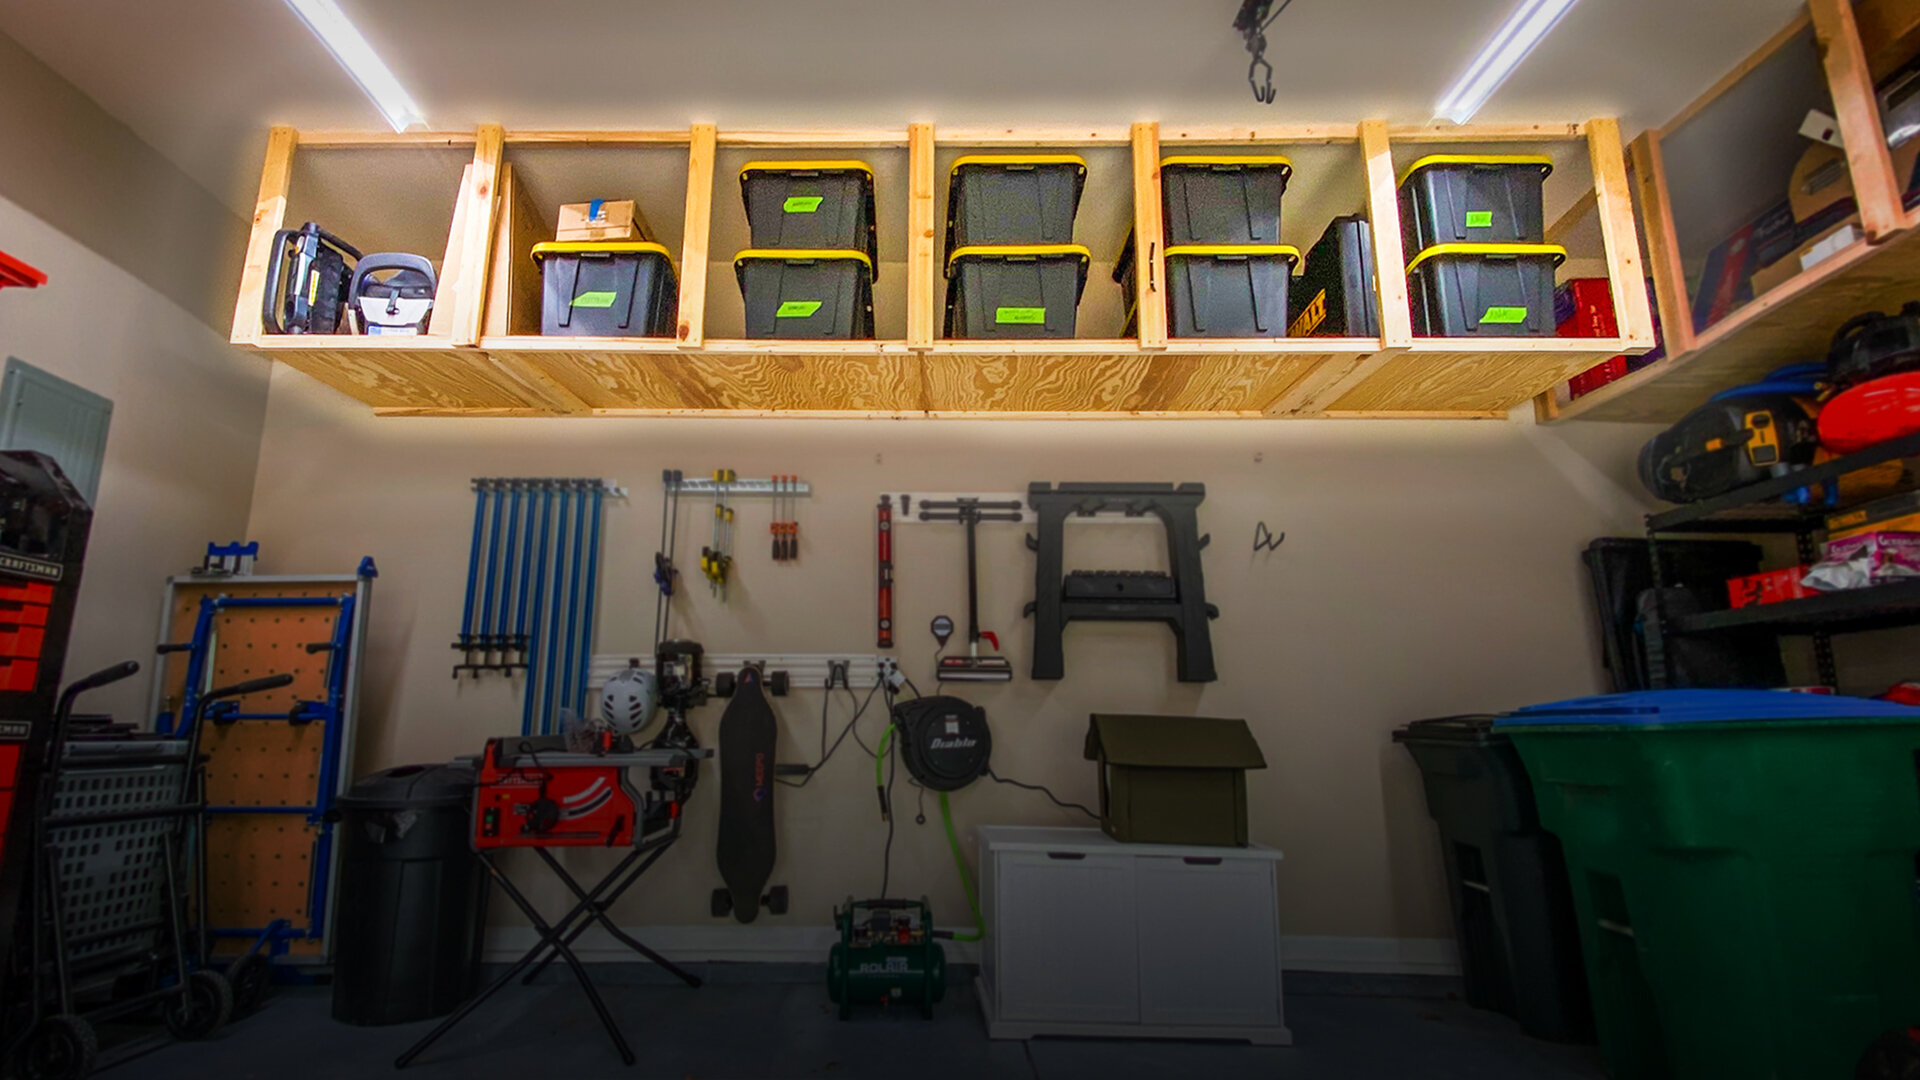 How To Build Diy Garage Storage Shelves, How To Build Suspended Garage Storage Shelves